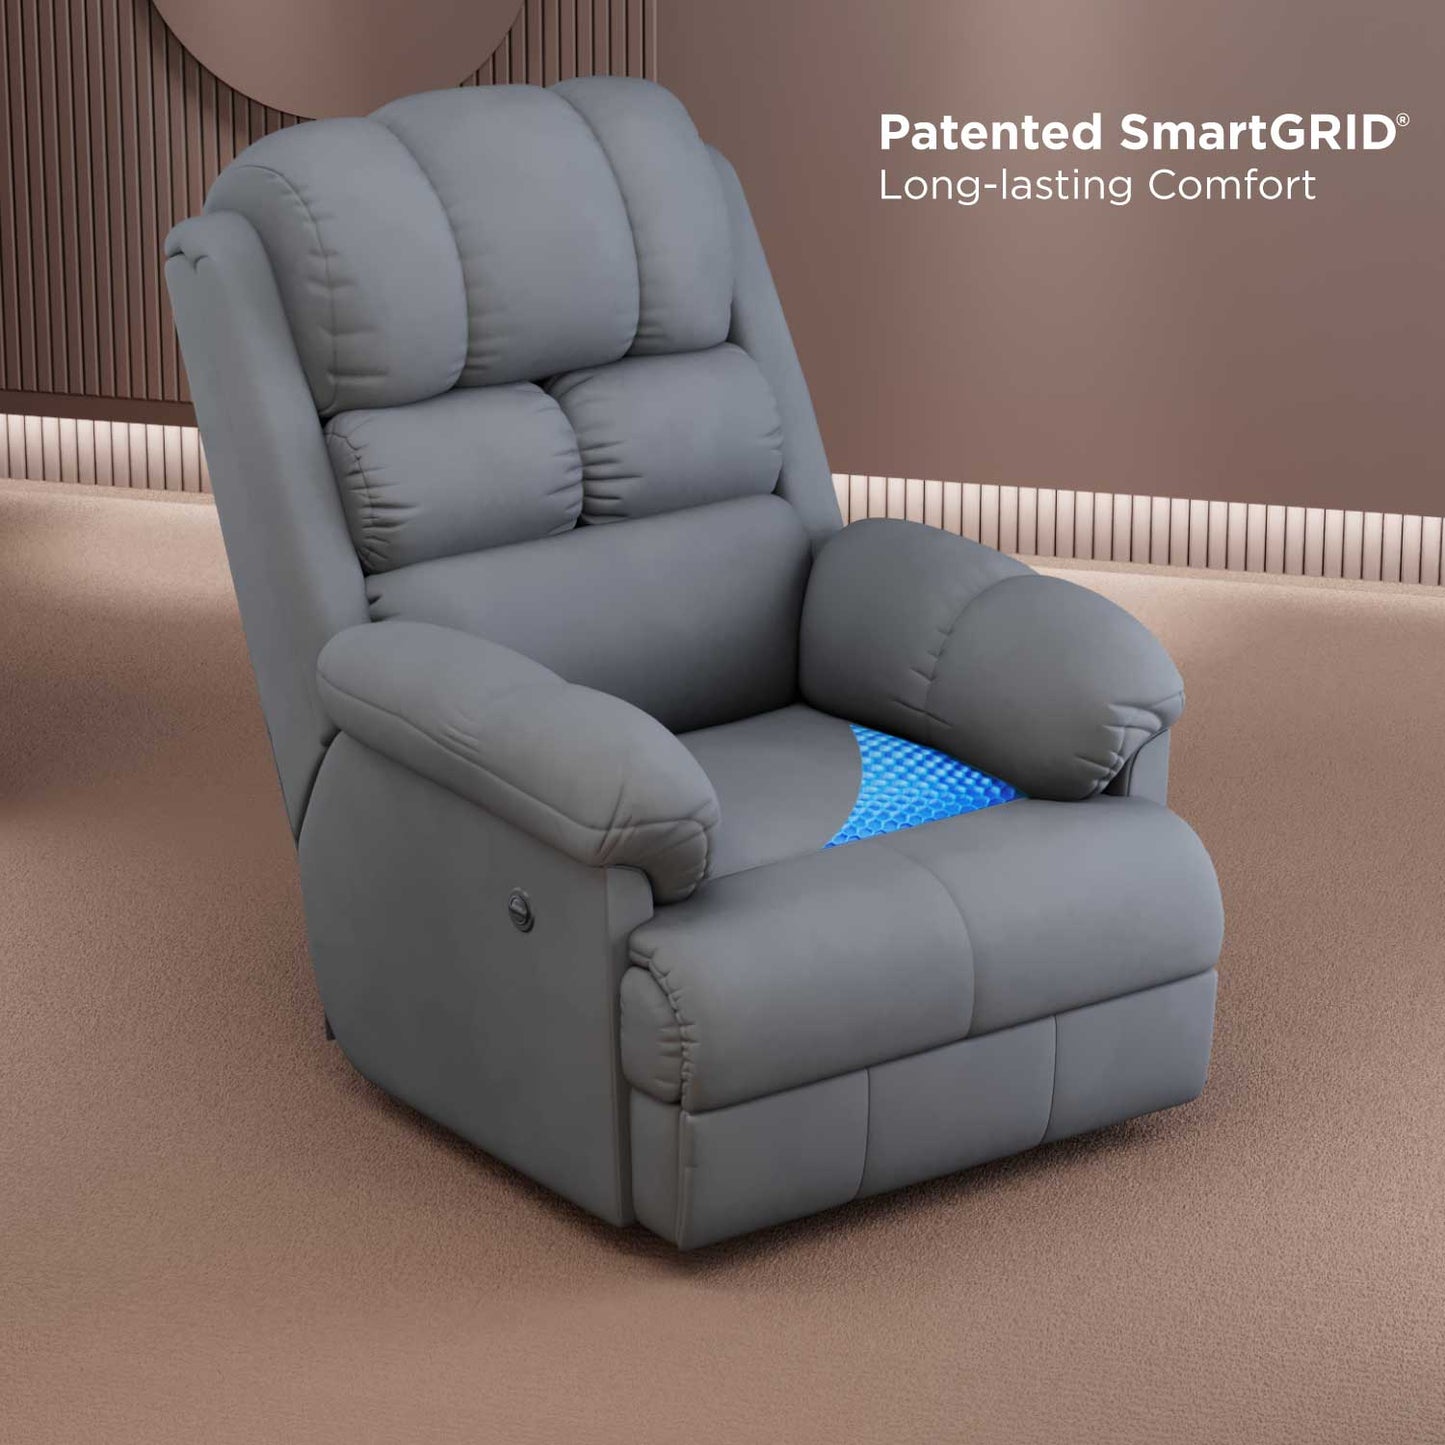 Recliner Sofa patented smartgrid